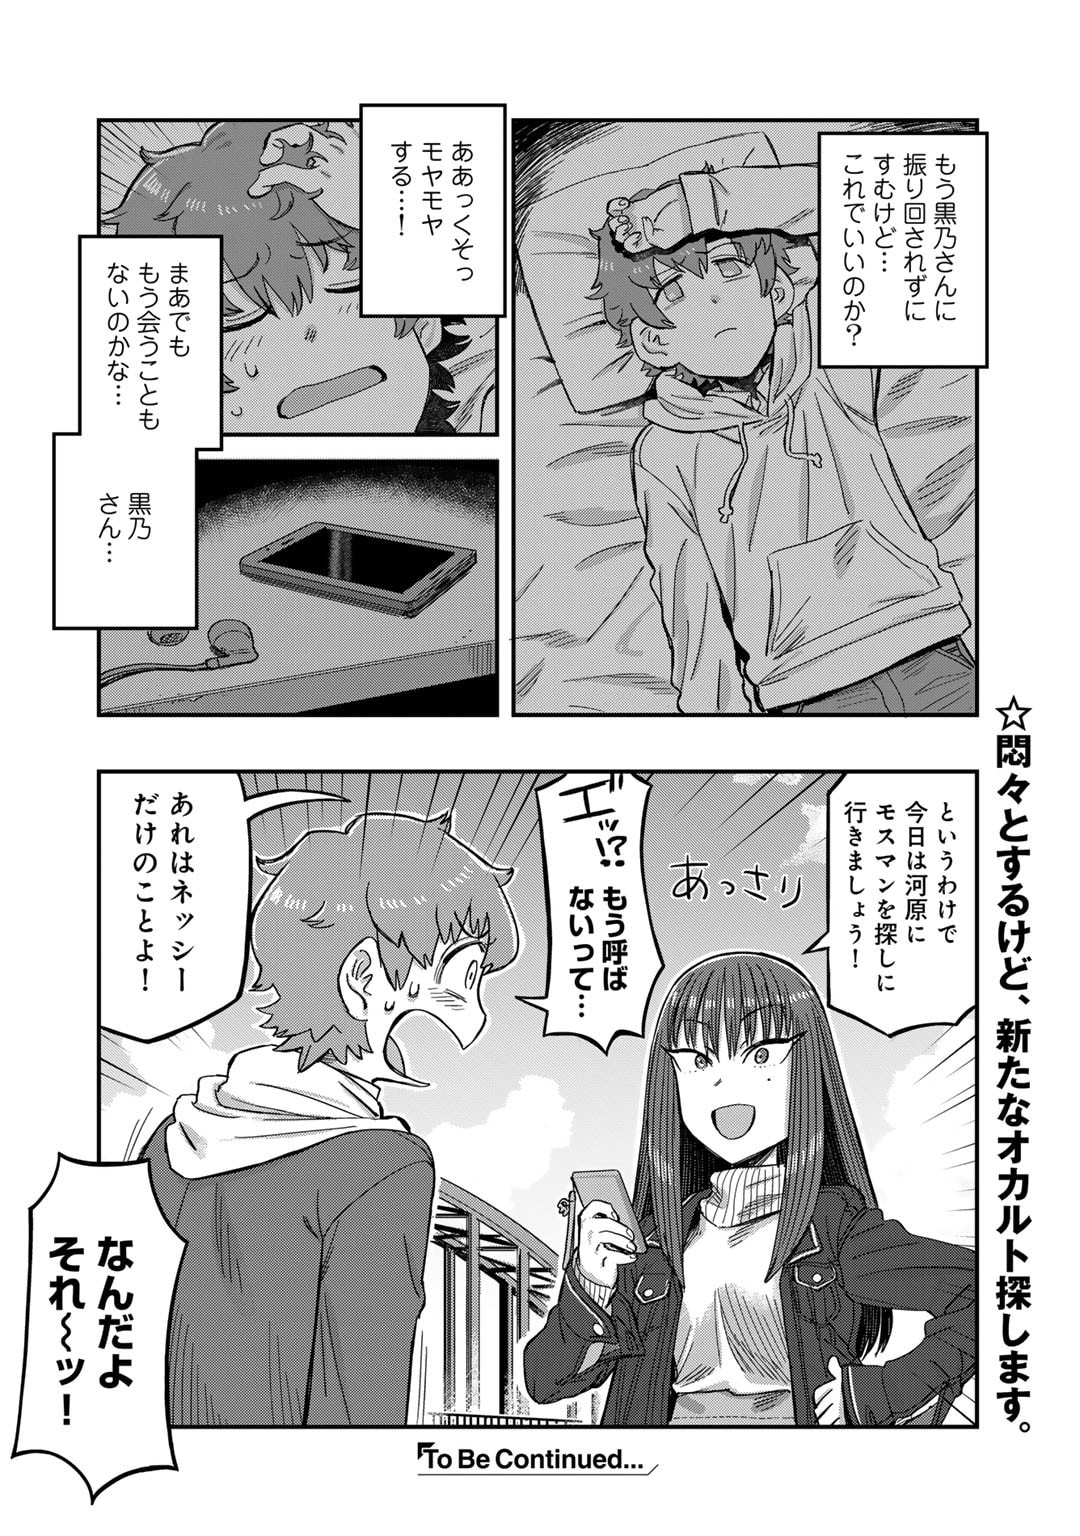 Kurono-san wa Occult ga Suki! - Chapter 5 - Page 18